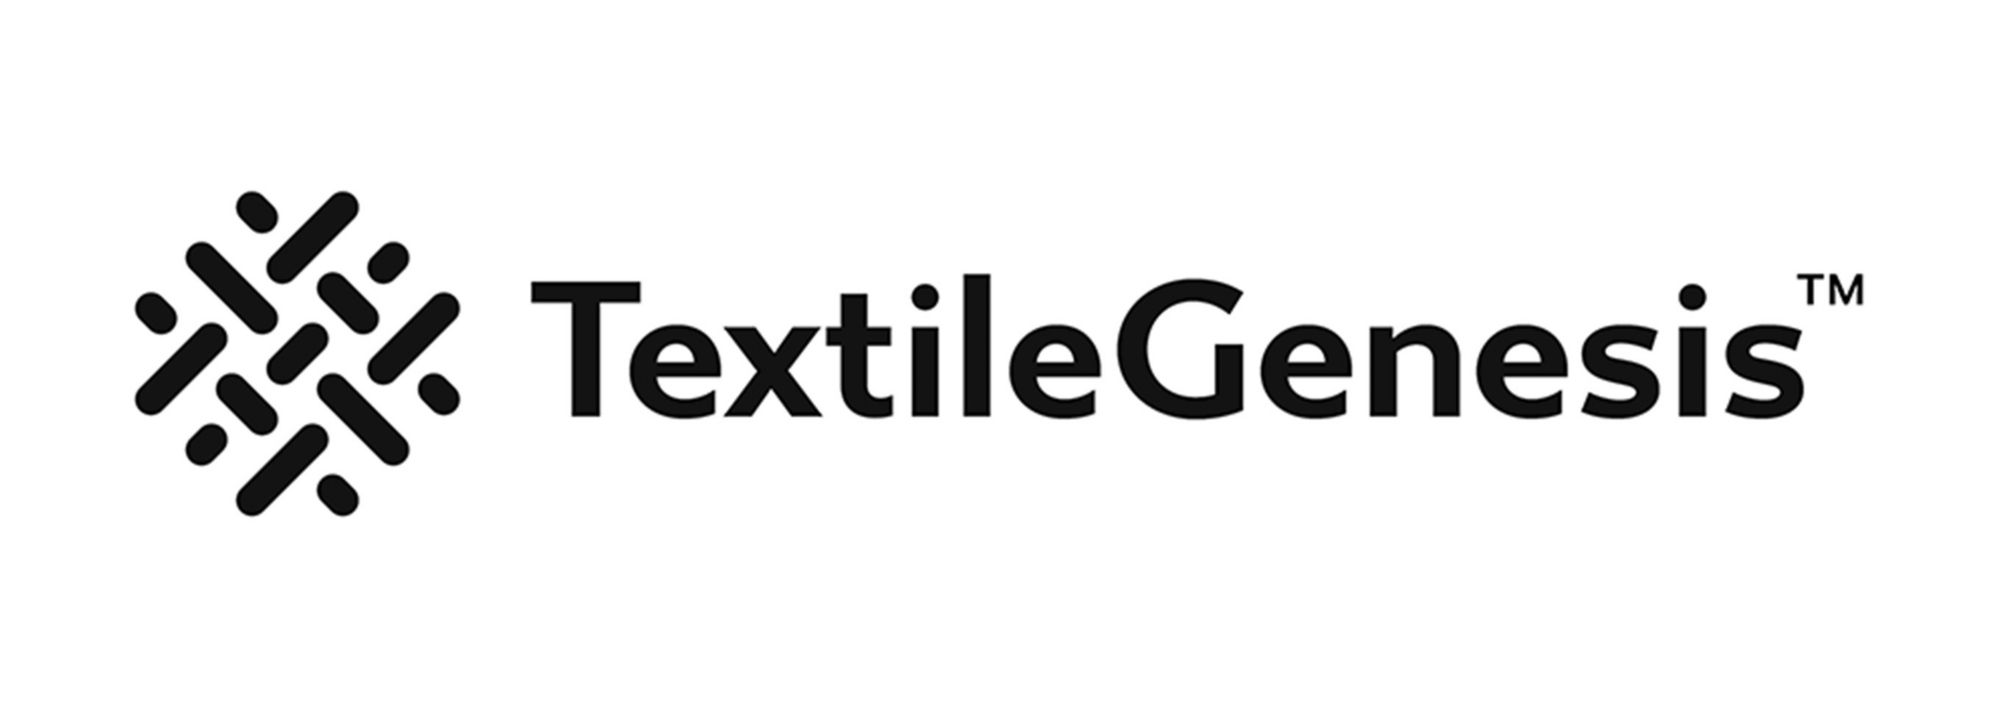 TextileGenesis logo 